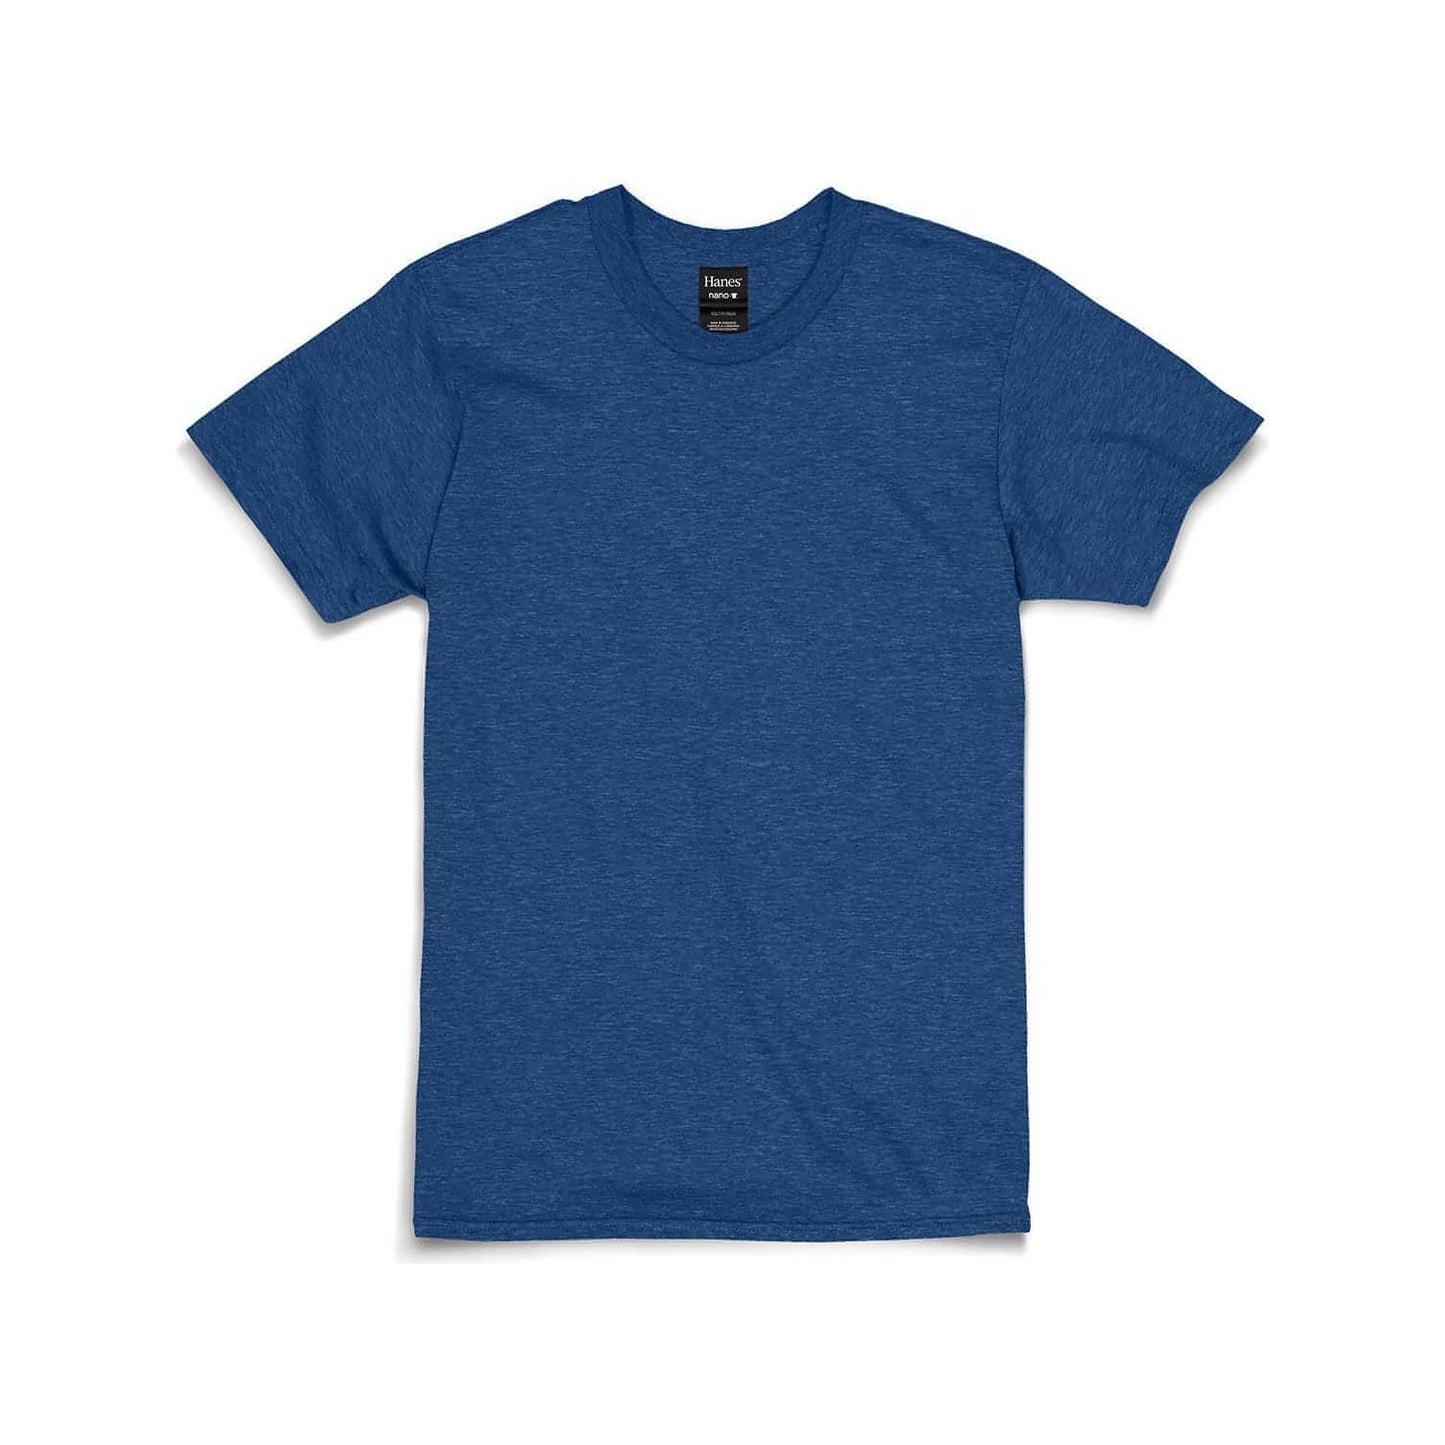 Hanes Men's X-Temp Performance Cool Crew T-Shirts, 2 Pack (Blue)